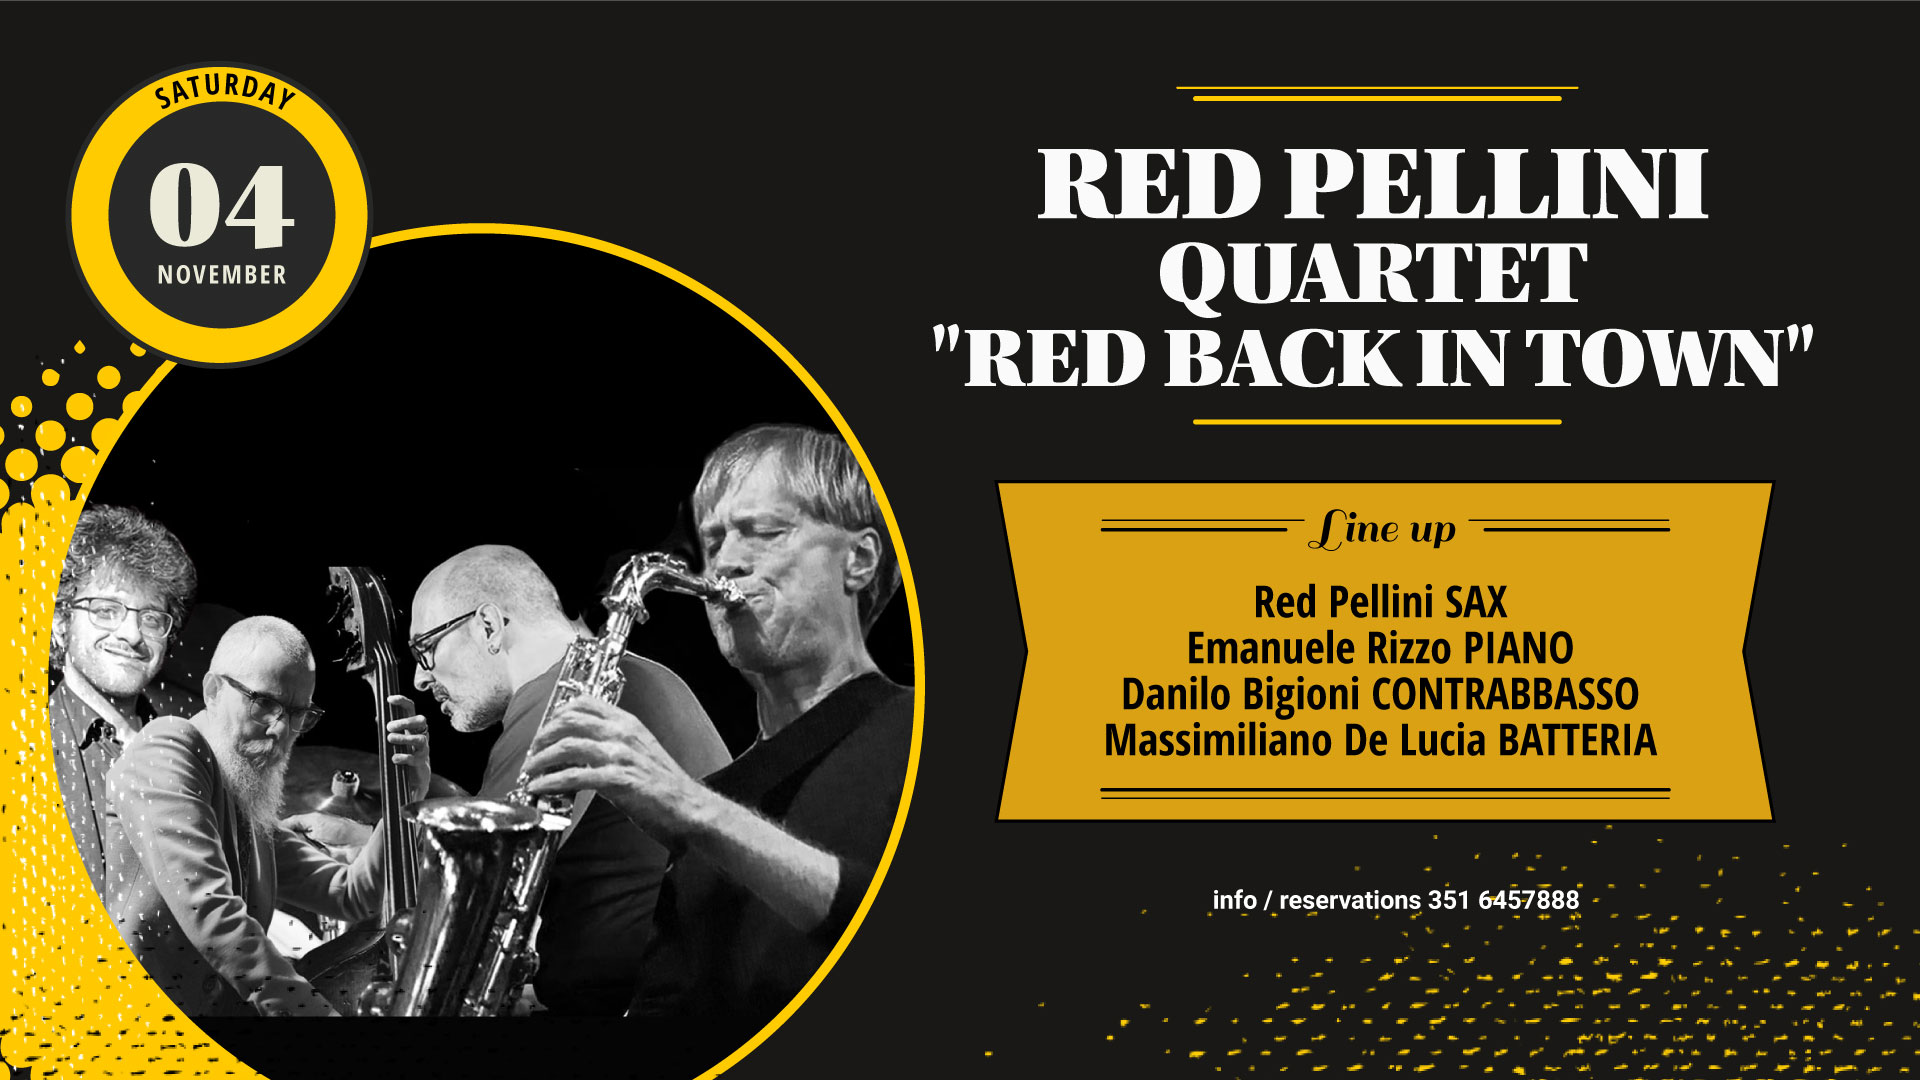 Red Pellini Quartet “Red back in town”